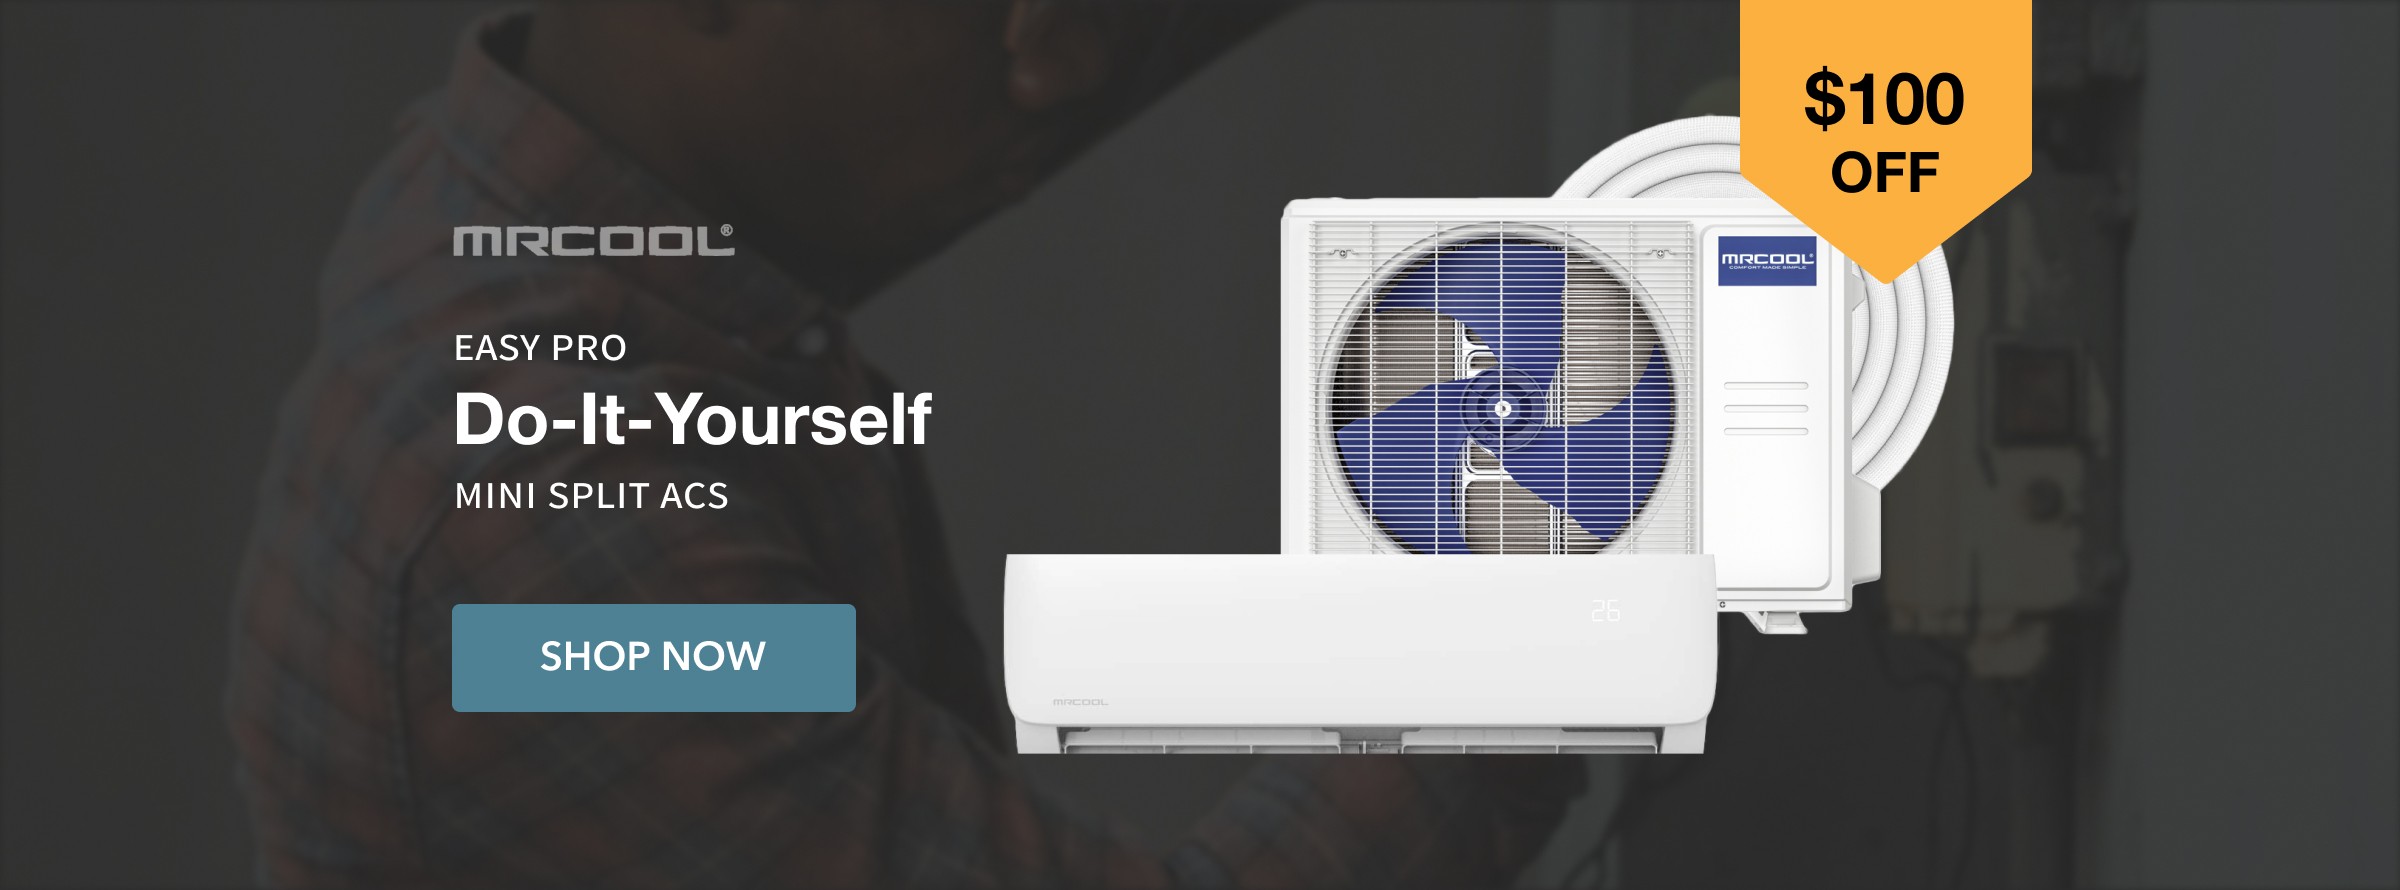 MRCOOL DIY Mini Split Air Conditioners $100 Off